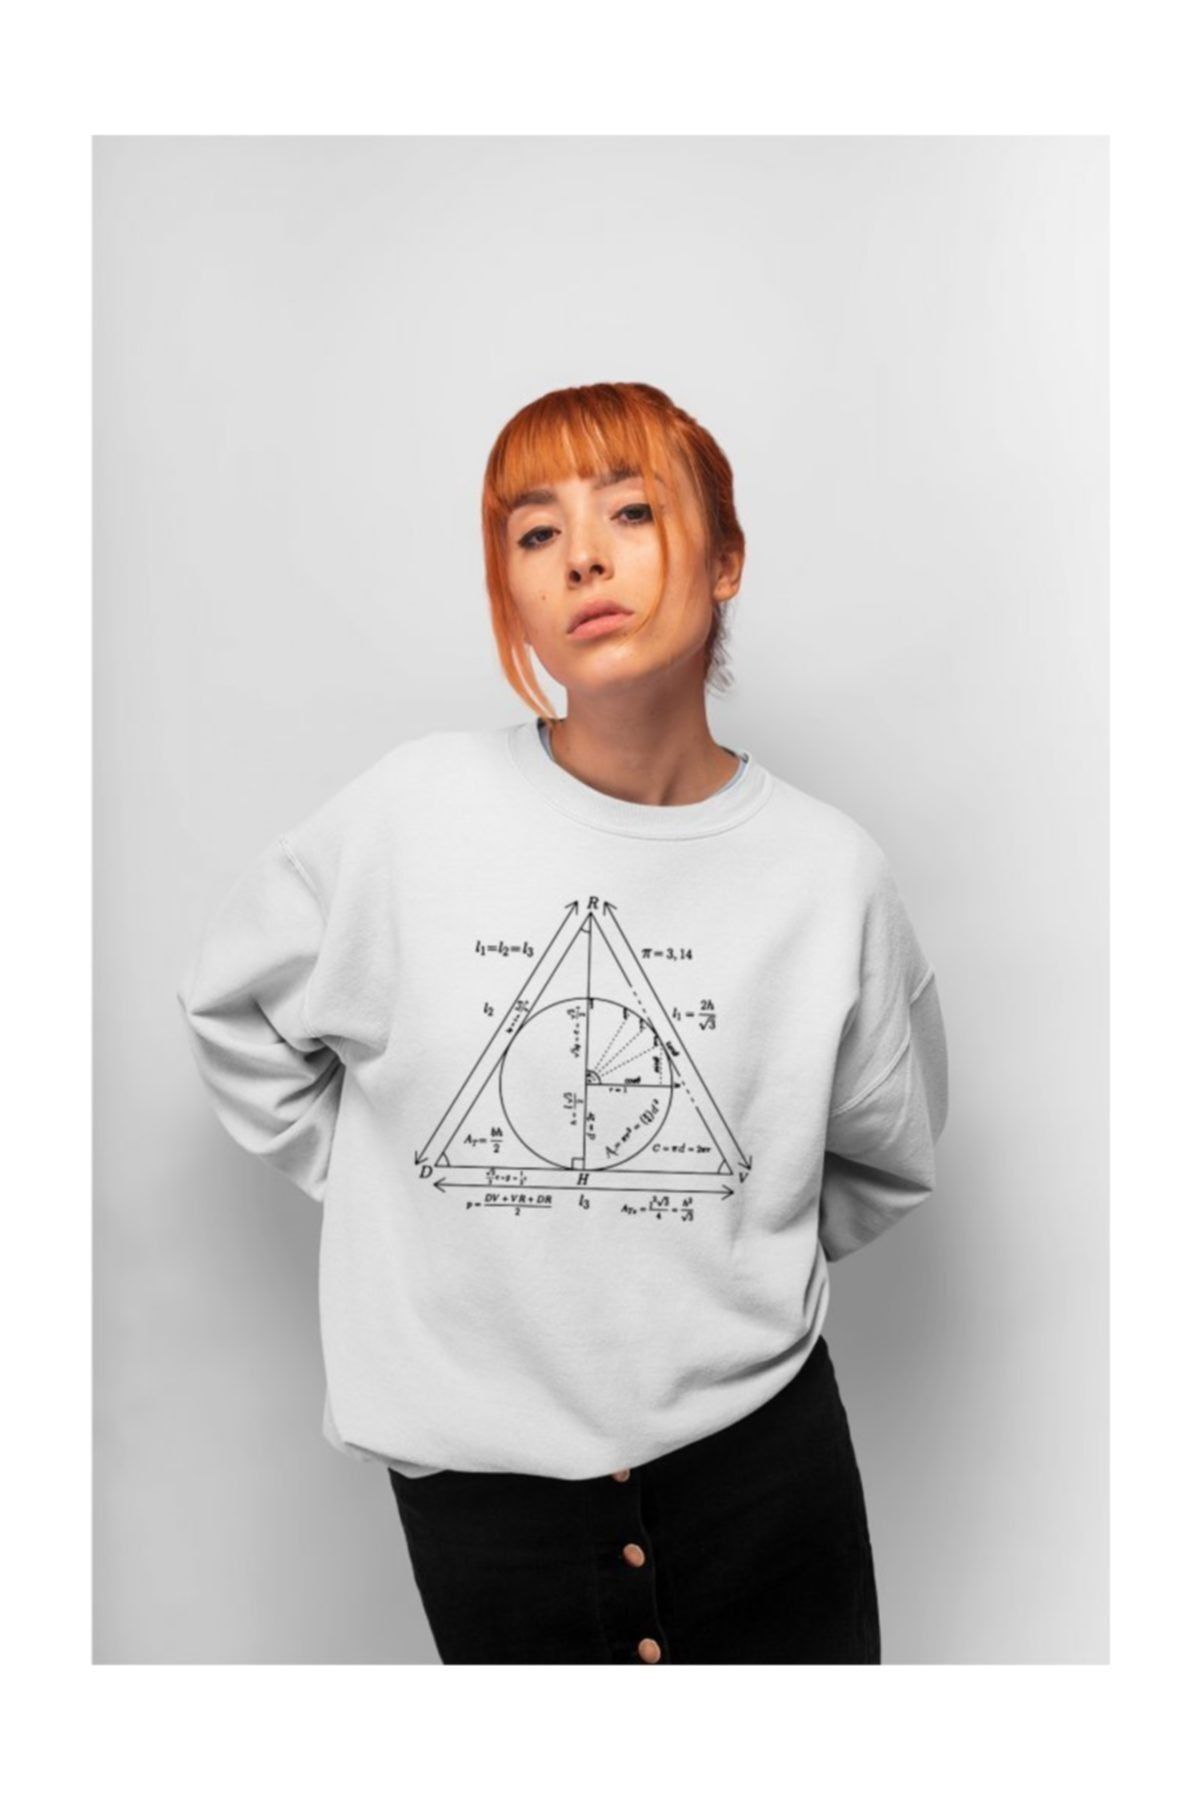 Angemiel Wear Geometrik Şekiller Kadın Sweatshirt A0191WK